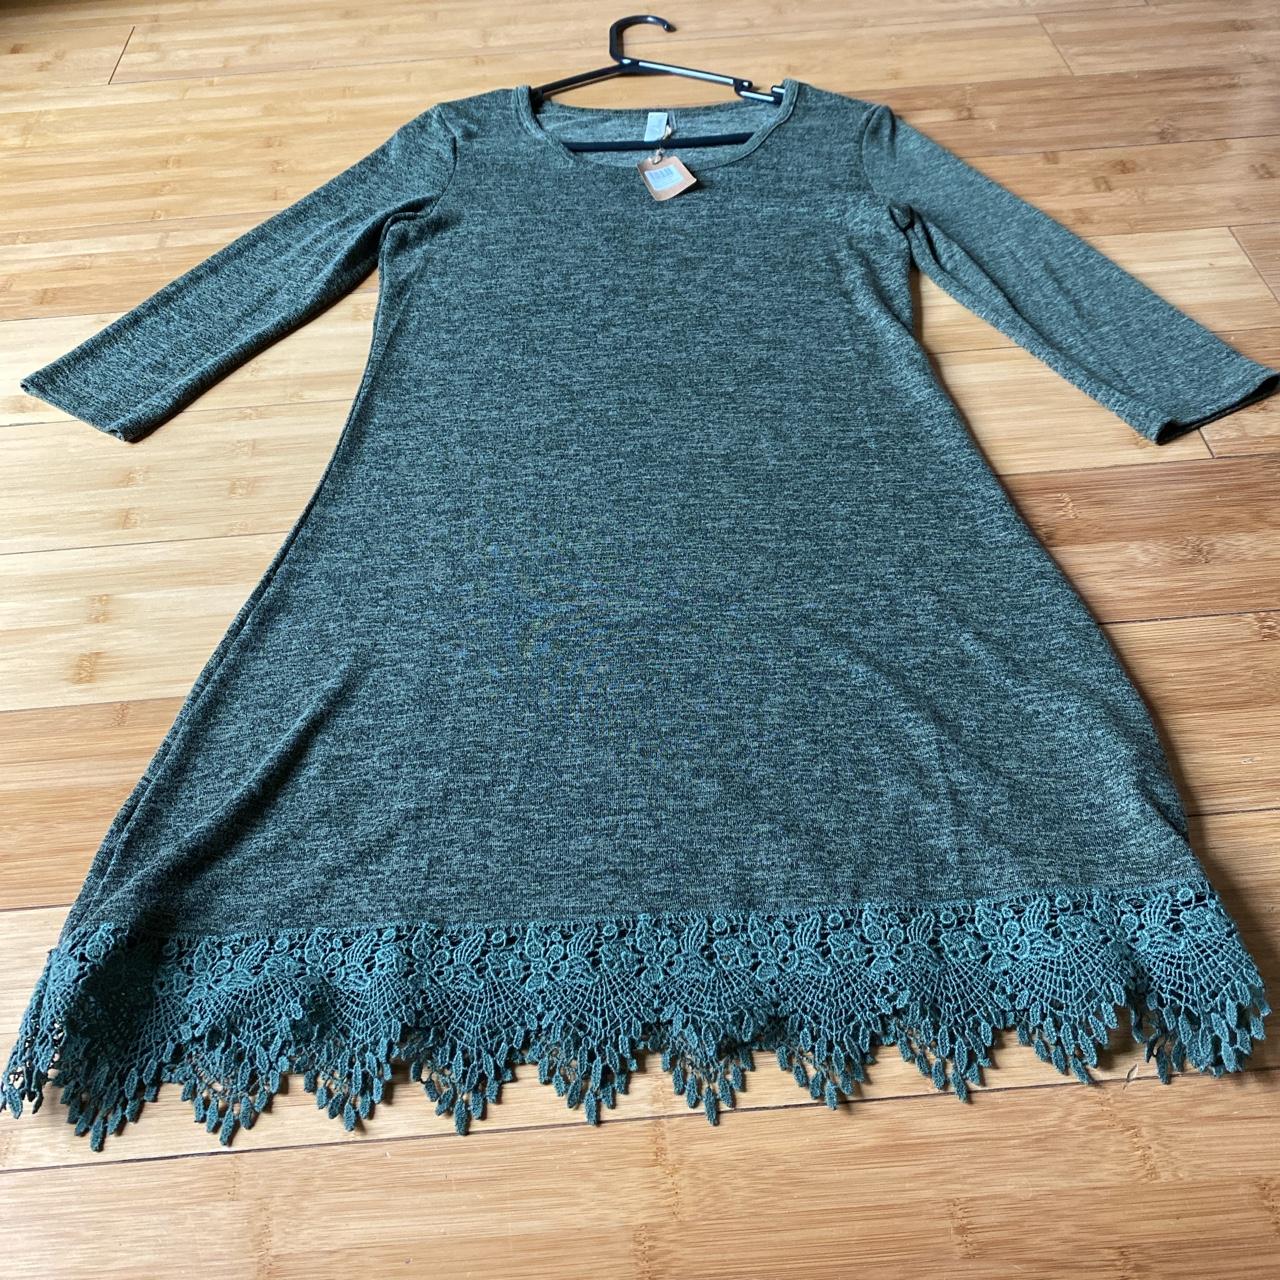 Product Image 4 - Olive lace hem dress. Size